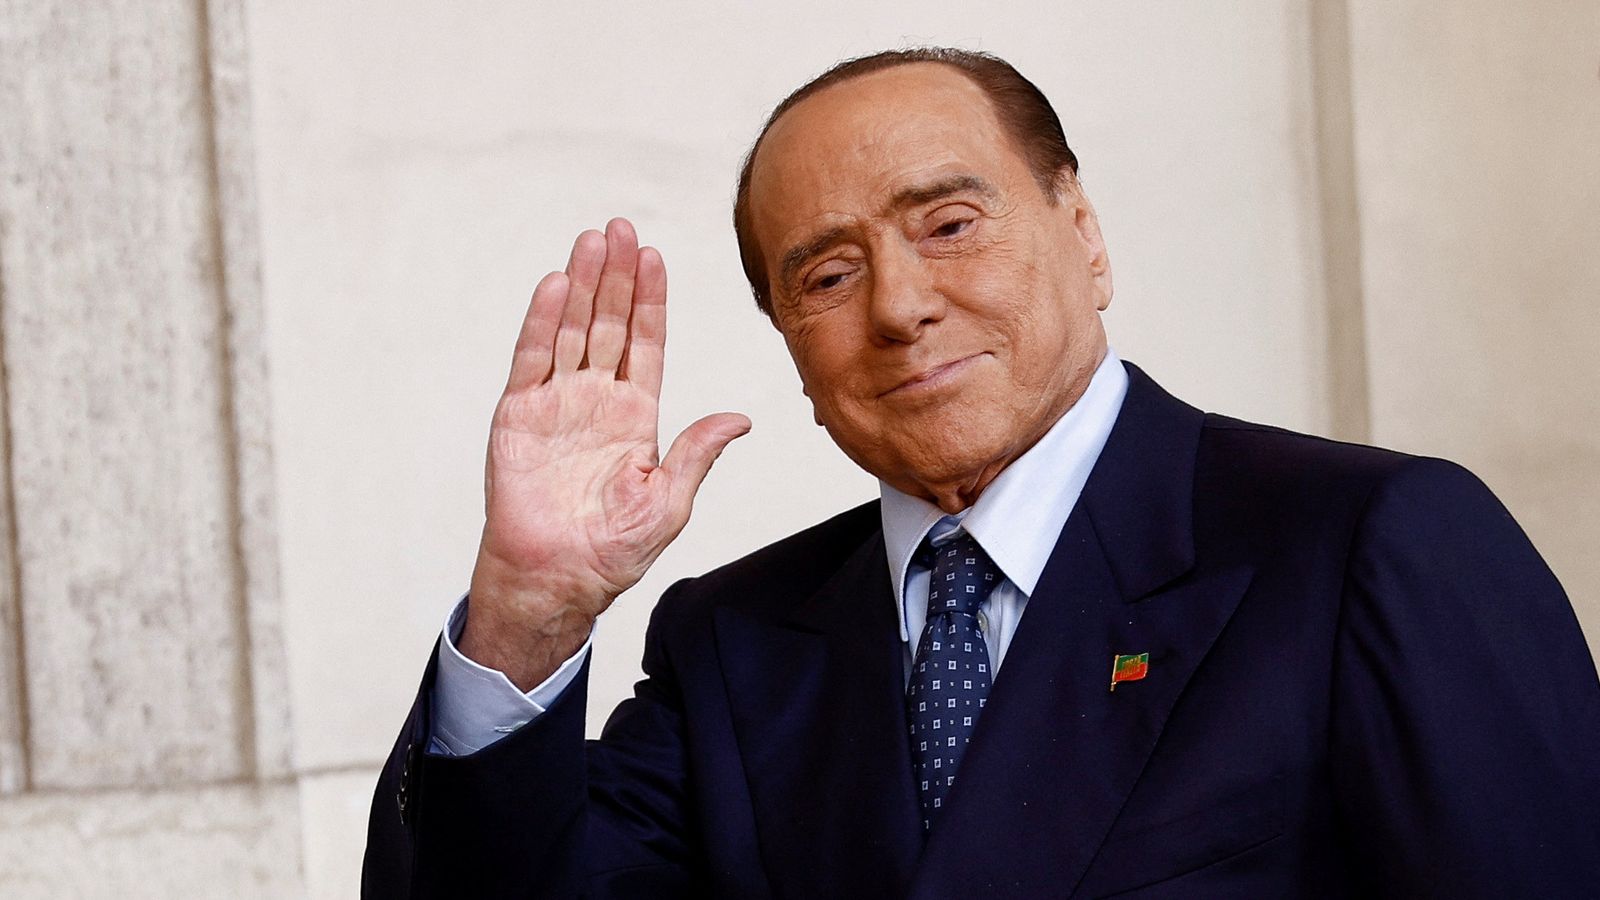 Silvio Berlusconi: Former Italian prime minister admitted to hospital with leukaemia